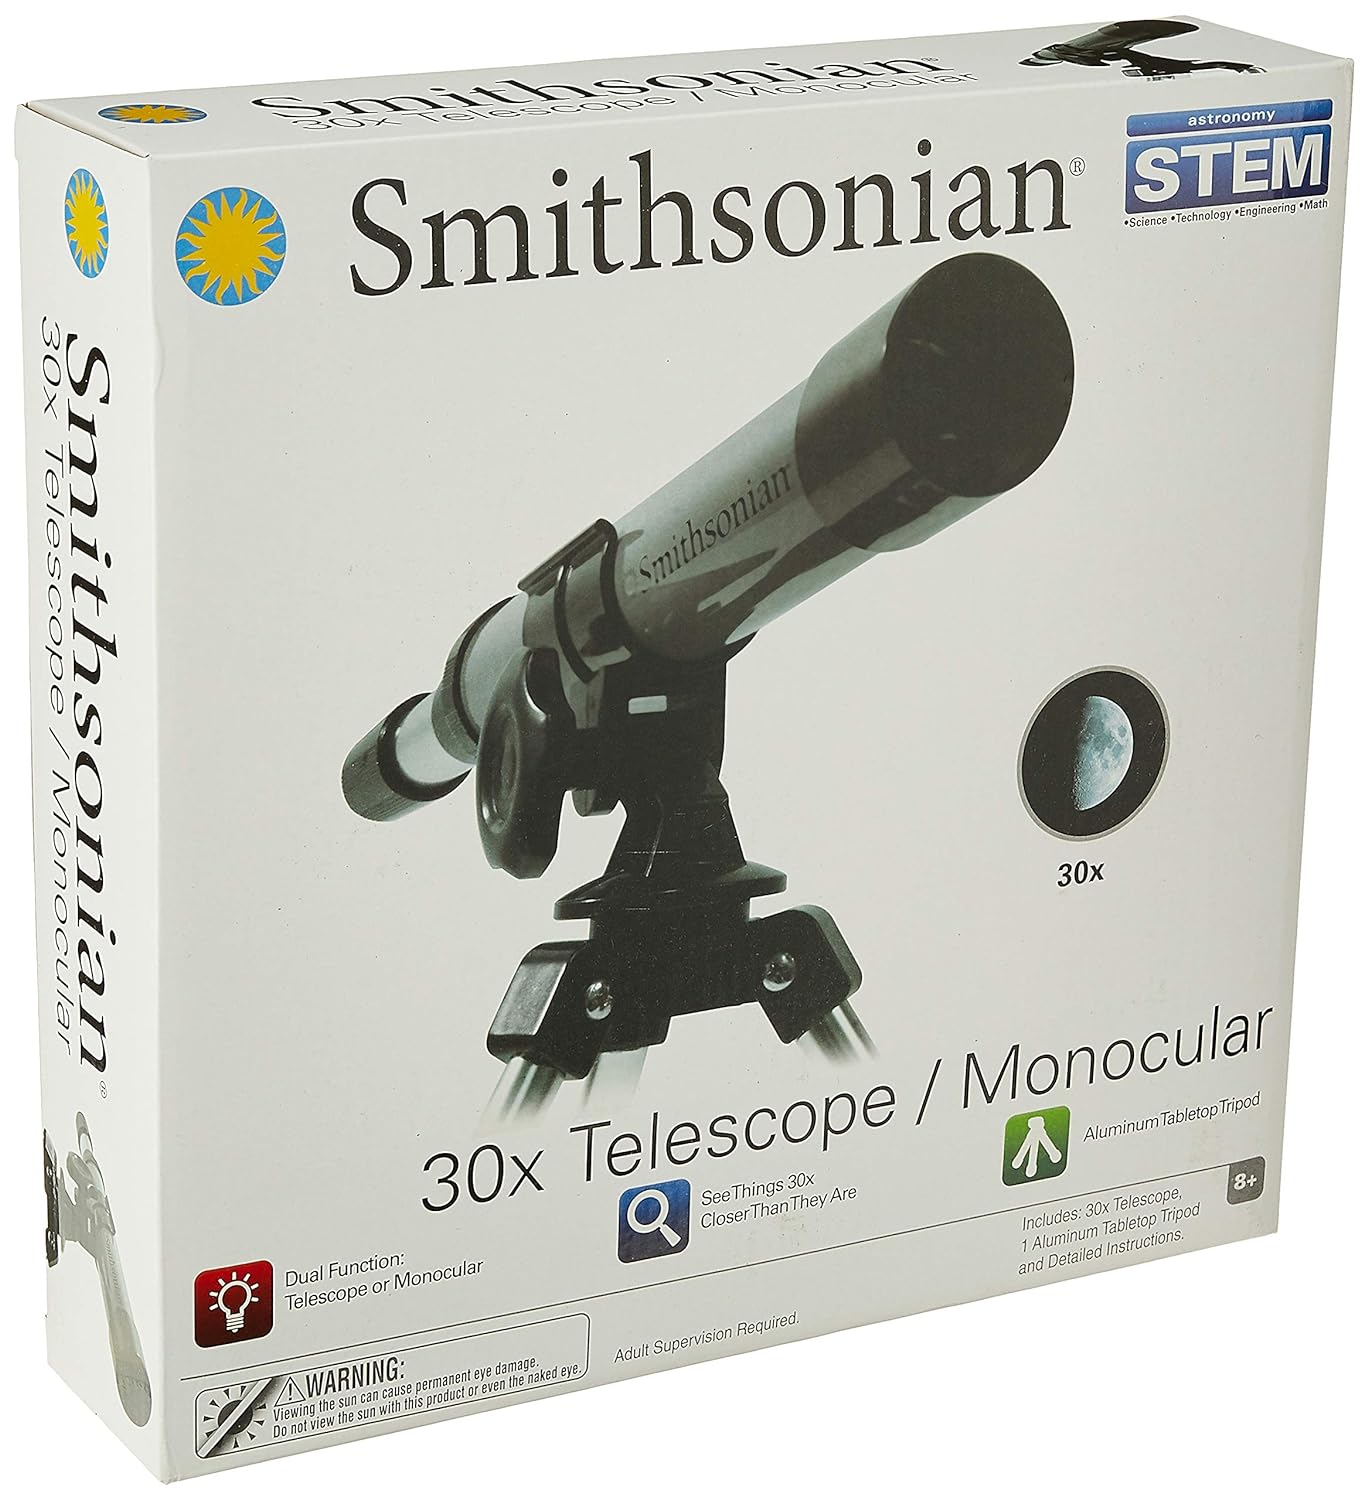 Smithsonian 30x Telescope/Monocular